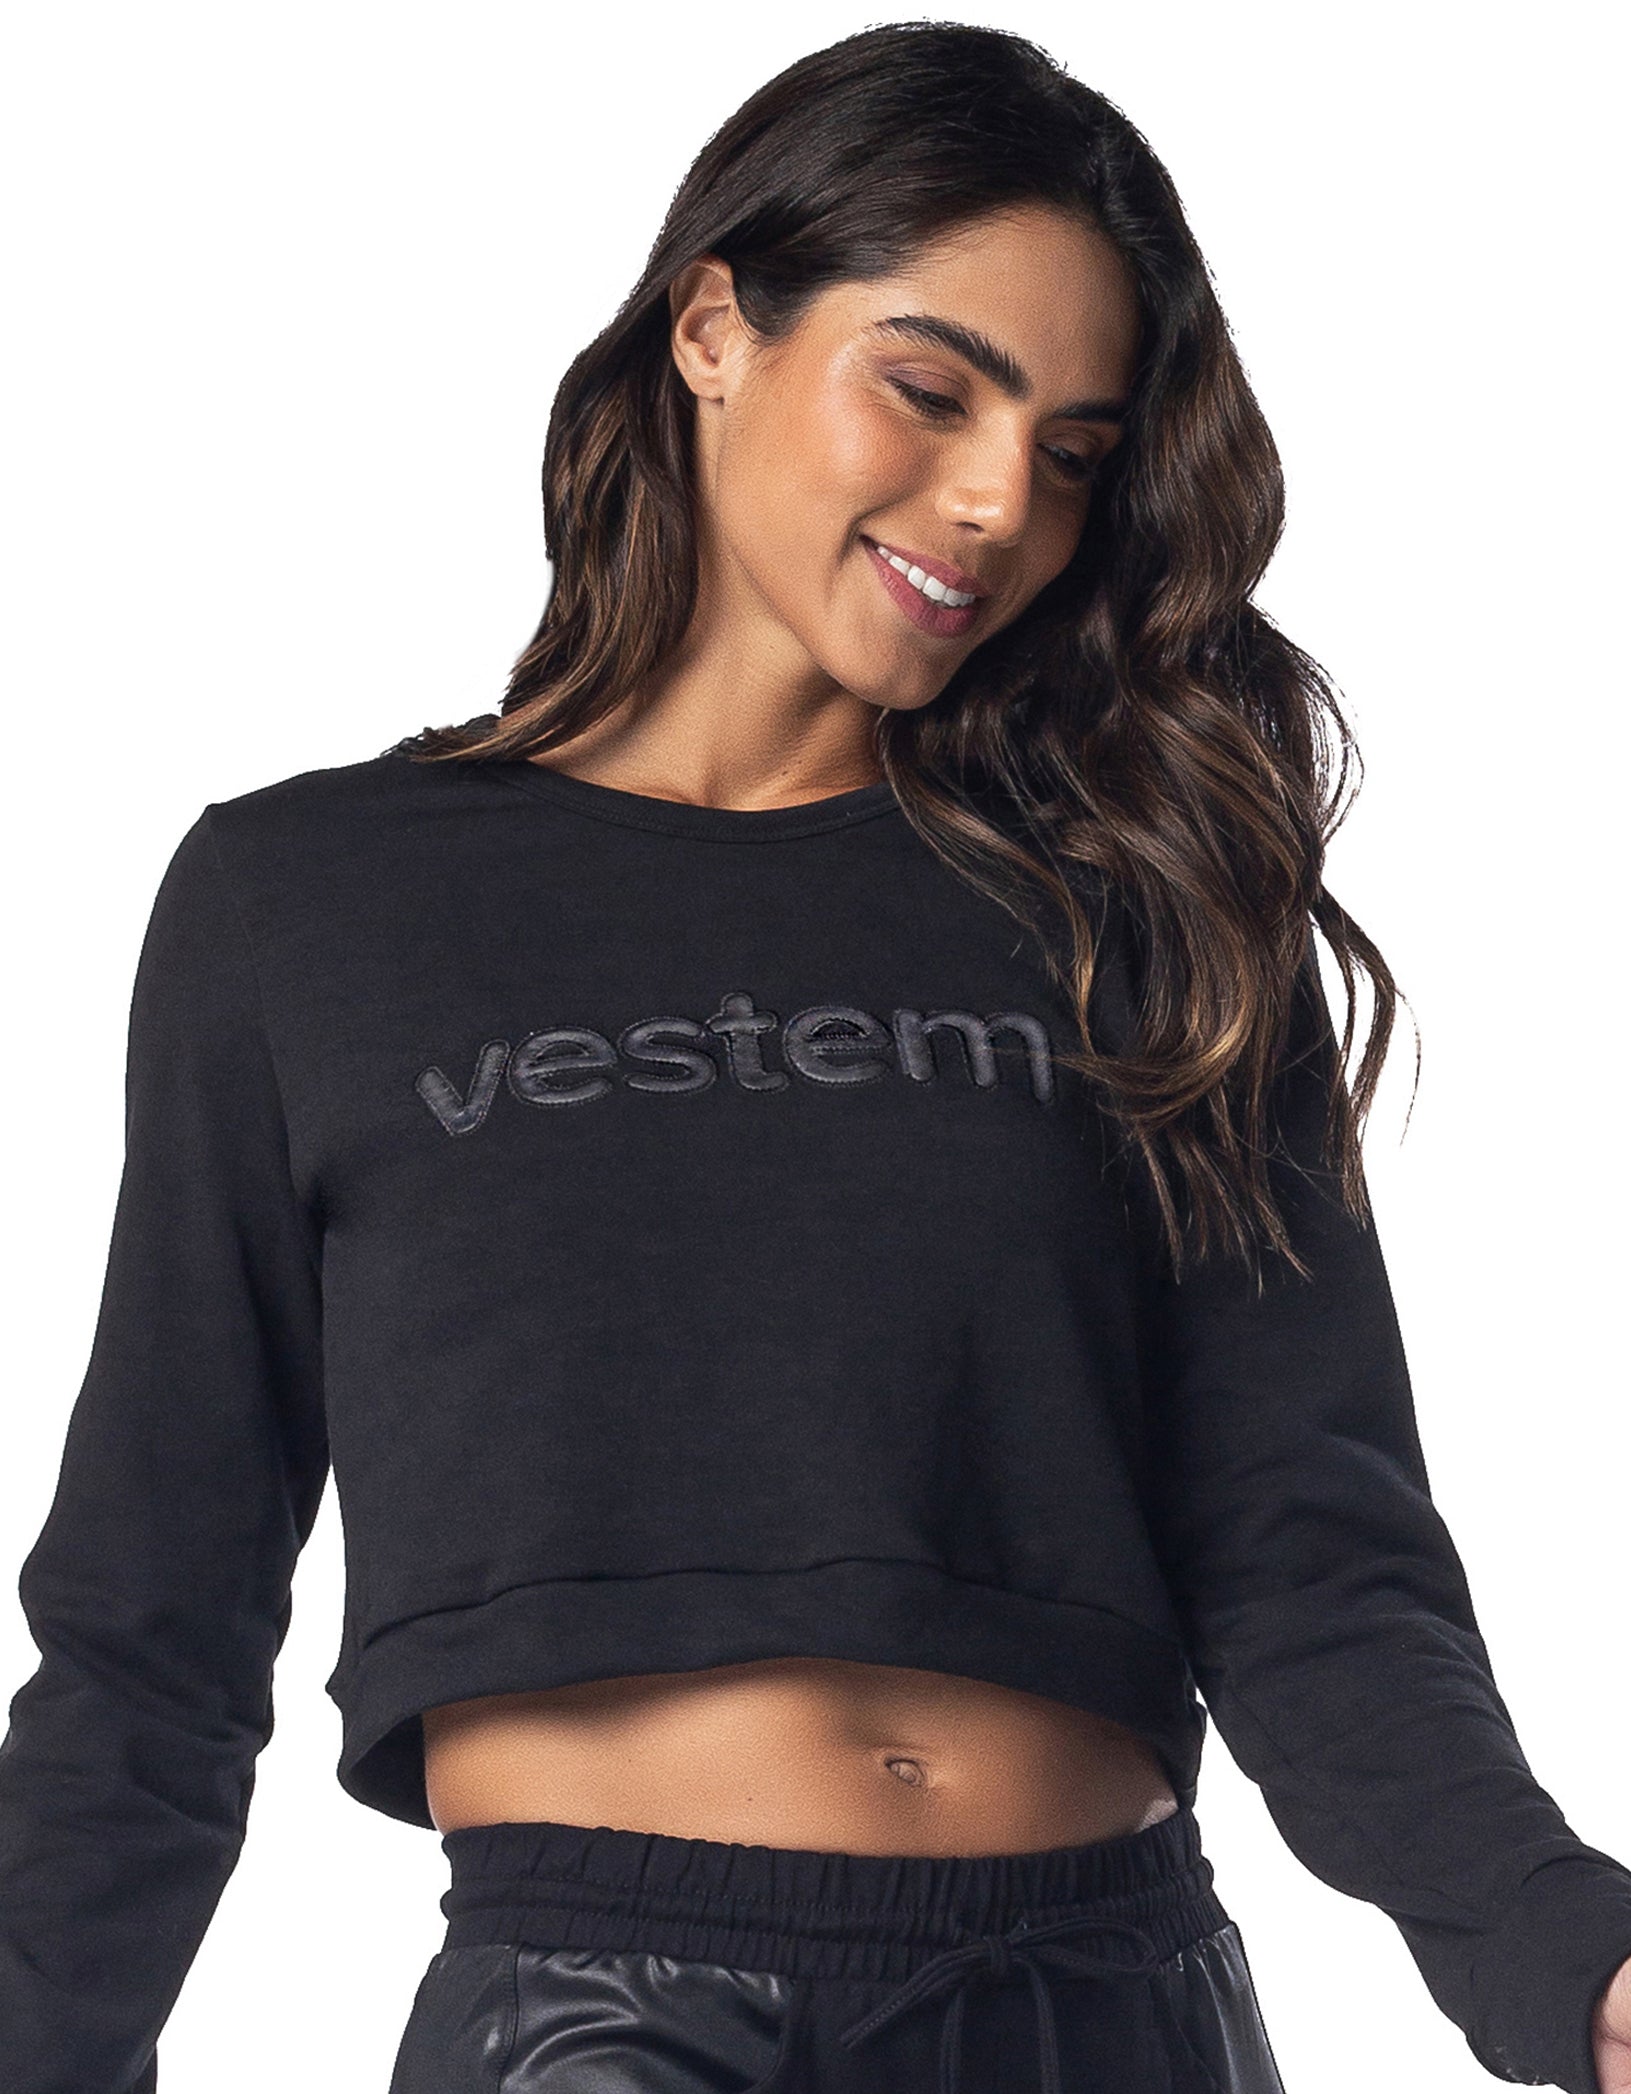 Vestem - Long Sleeve Shirt New Negroni Black - BML389C0002